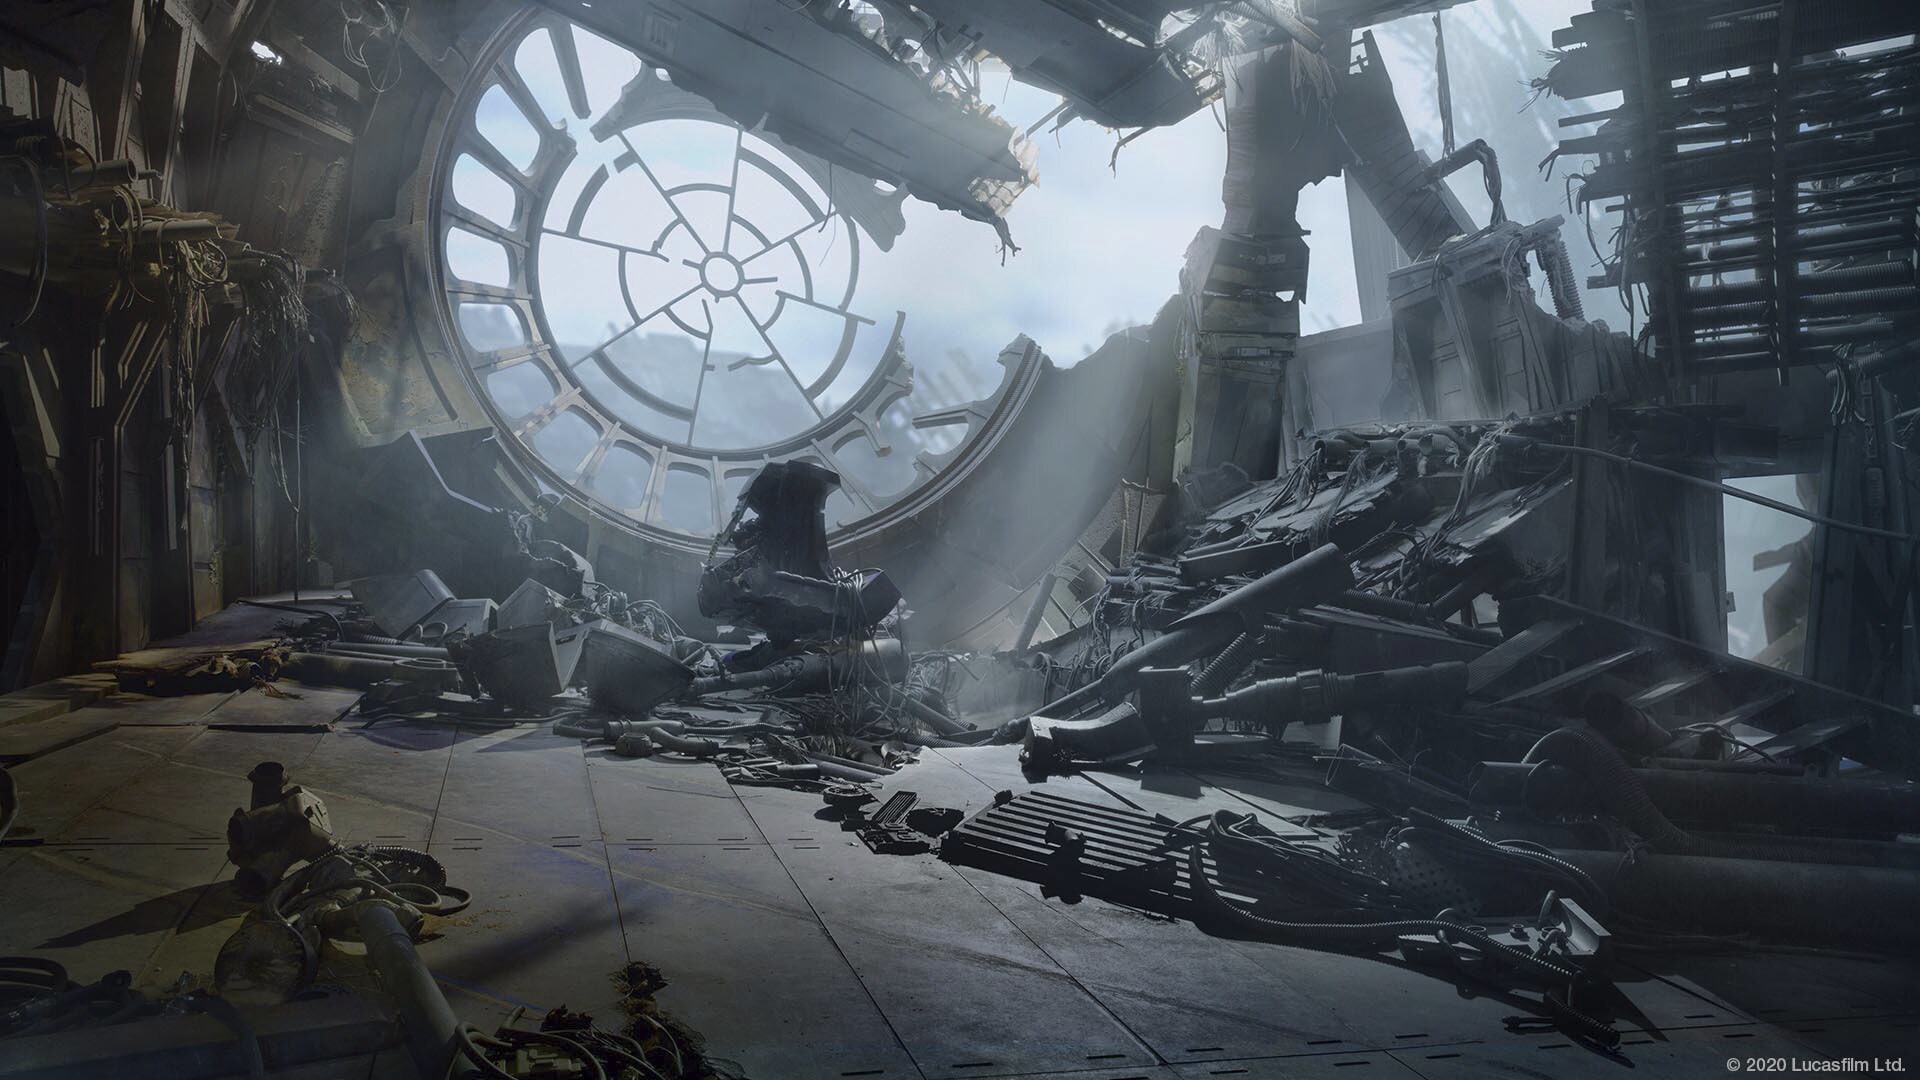 Star Wars virtual background: Death Star ruins